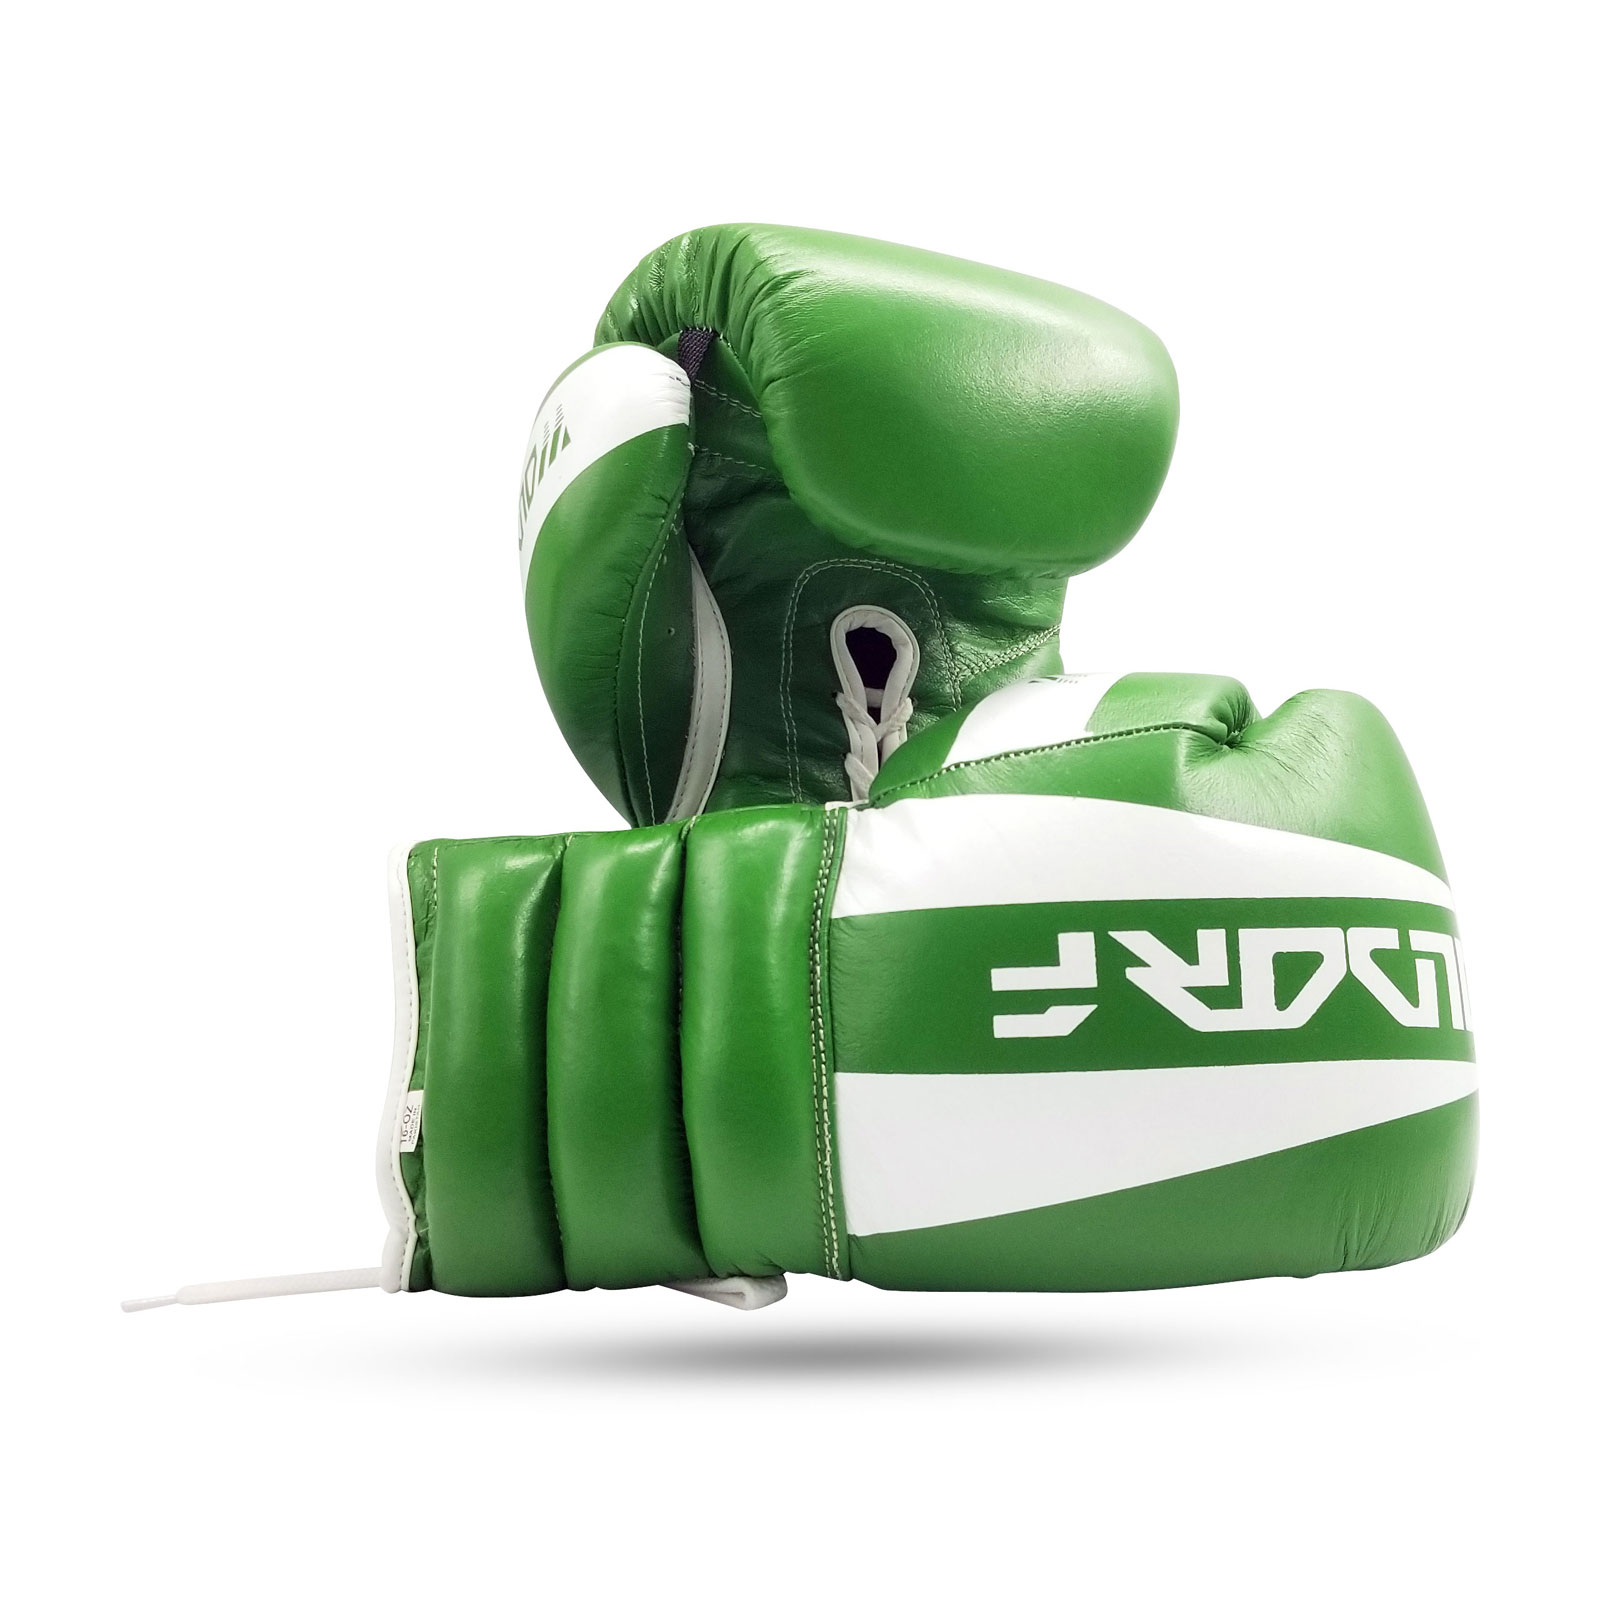 Woldorf USA Boxing Glove Kickboxing Lace up No Logo Plain Green Leather Glove 